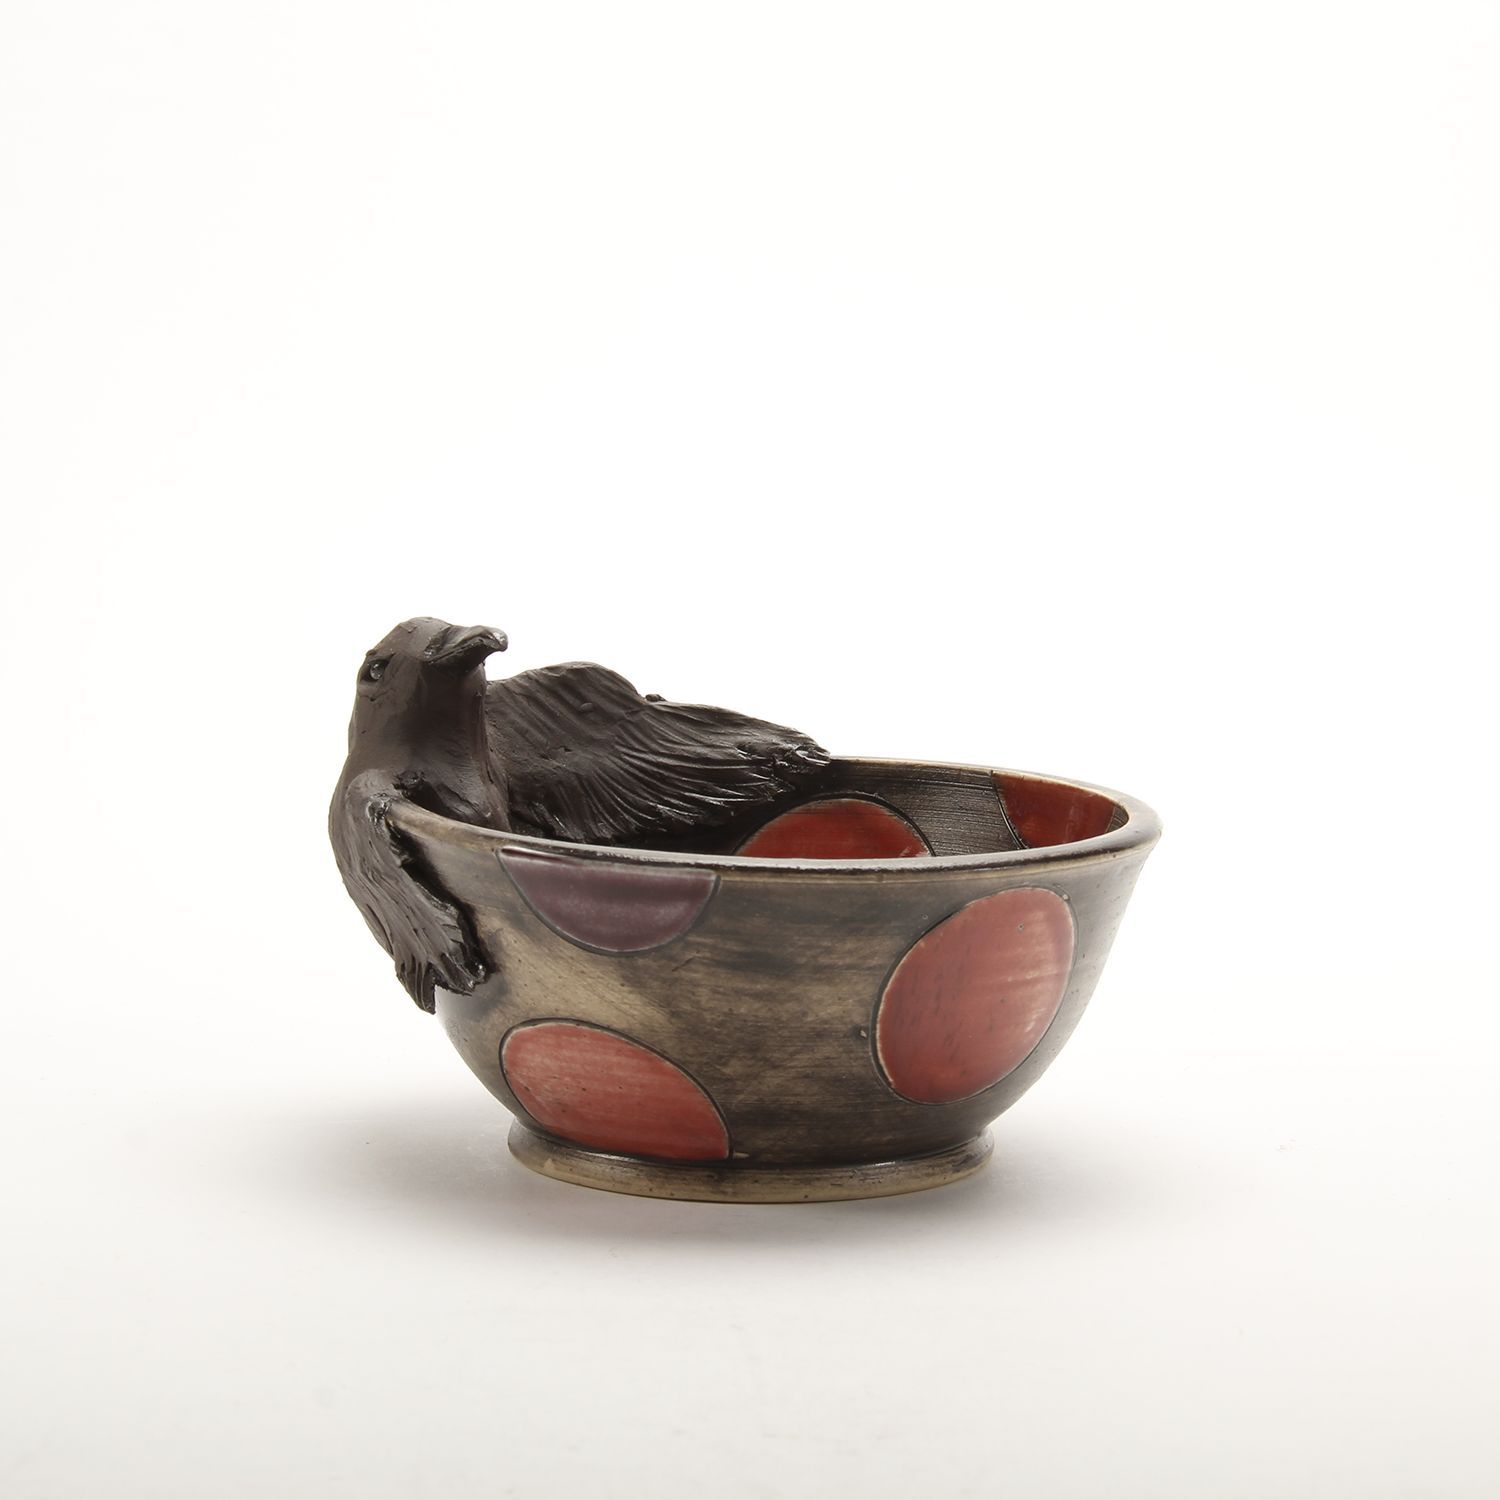 Marla Benton Marla Benton-s bowl wsculpture Product Image 3 of 3